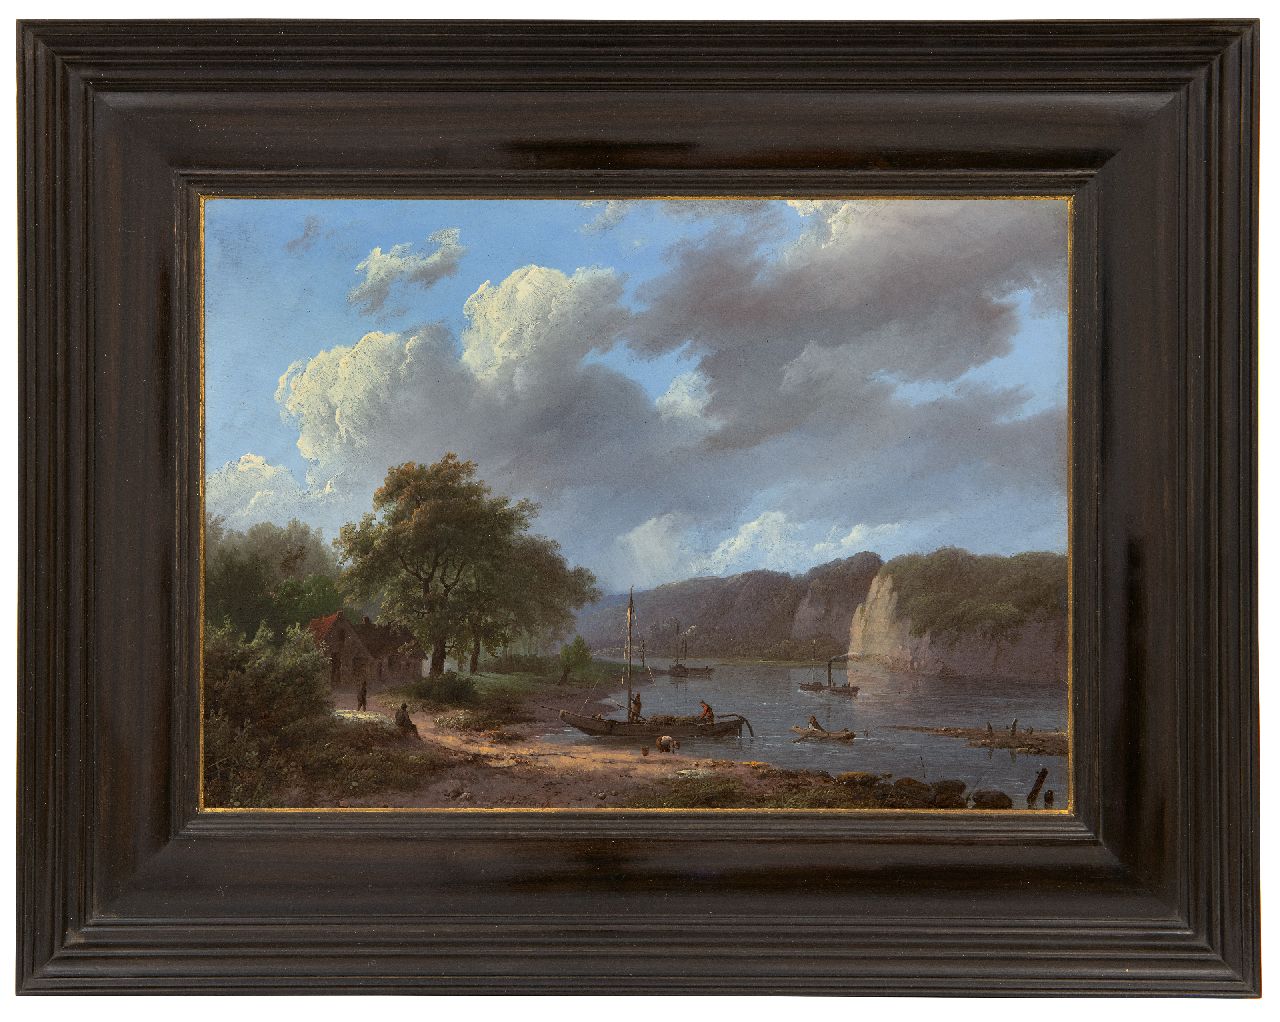 Koekkoek I M.A.  | Marinus Adrianus Koekkoek I | Paintings offered for sale | Rhine landscape, oil on panel 22.1 x 31.1 cm, signed l.c. and dated 1847